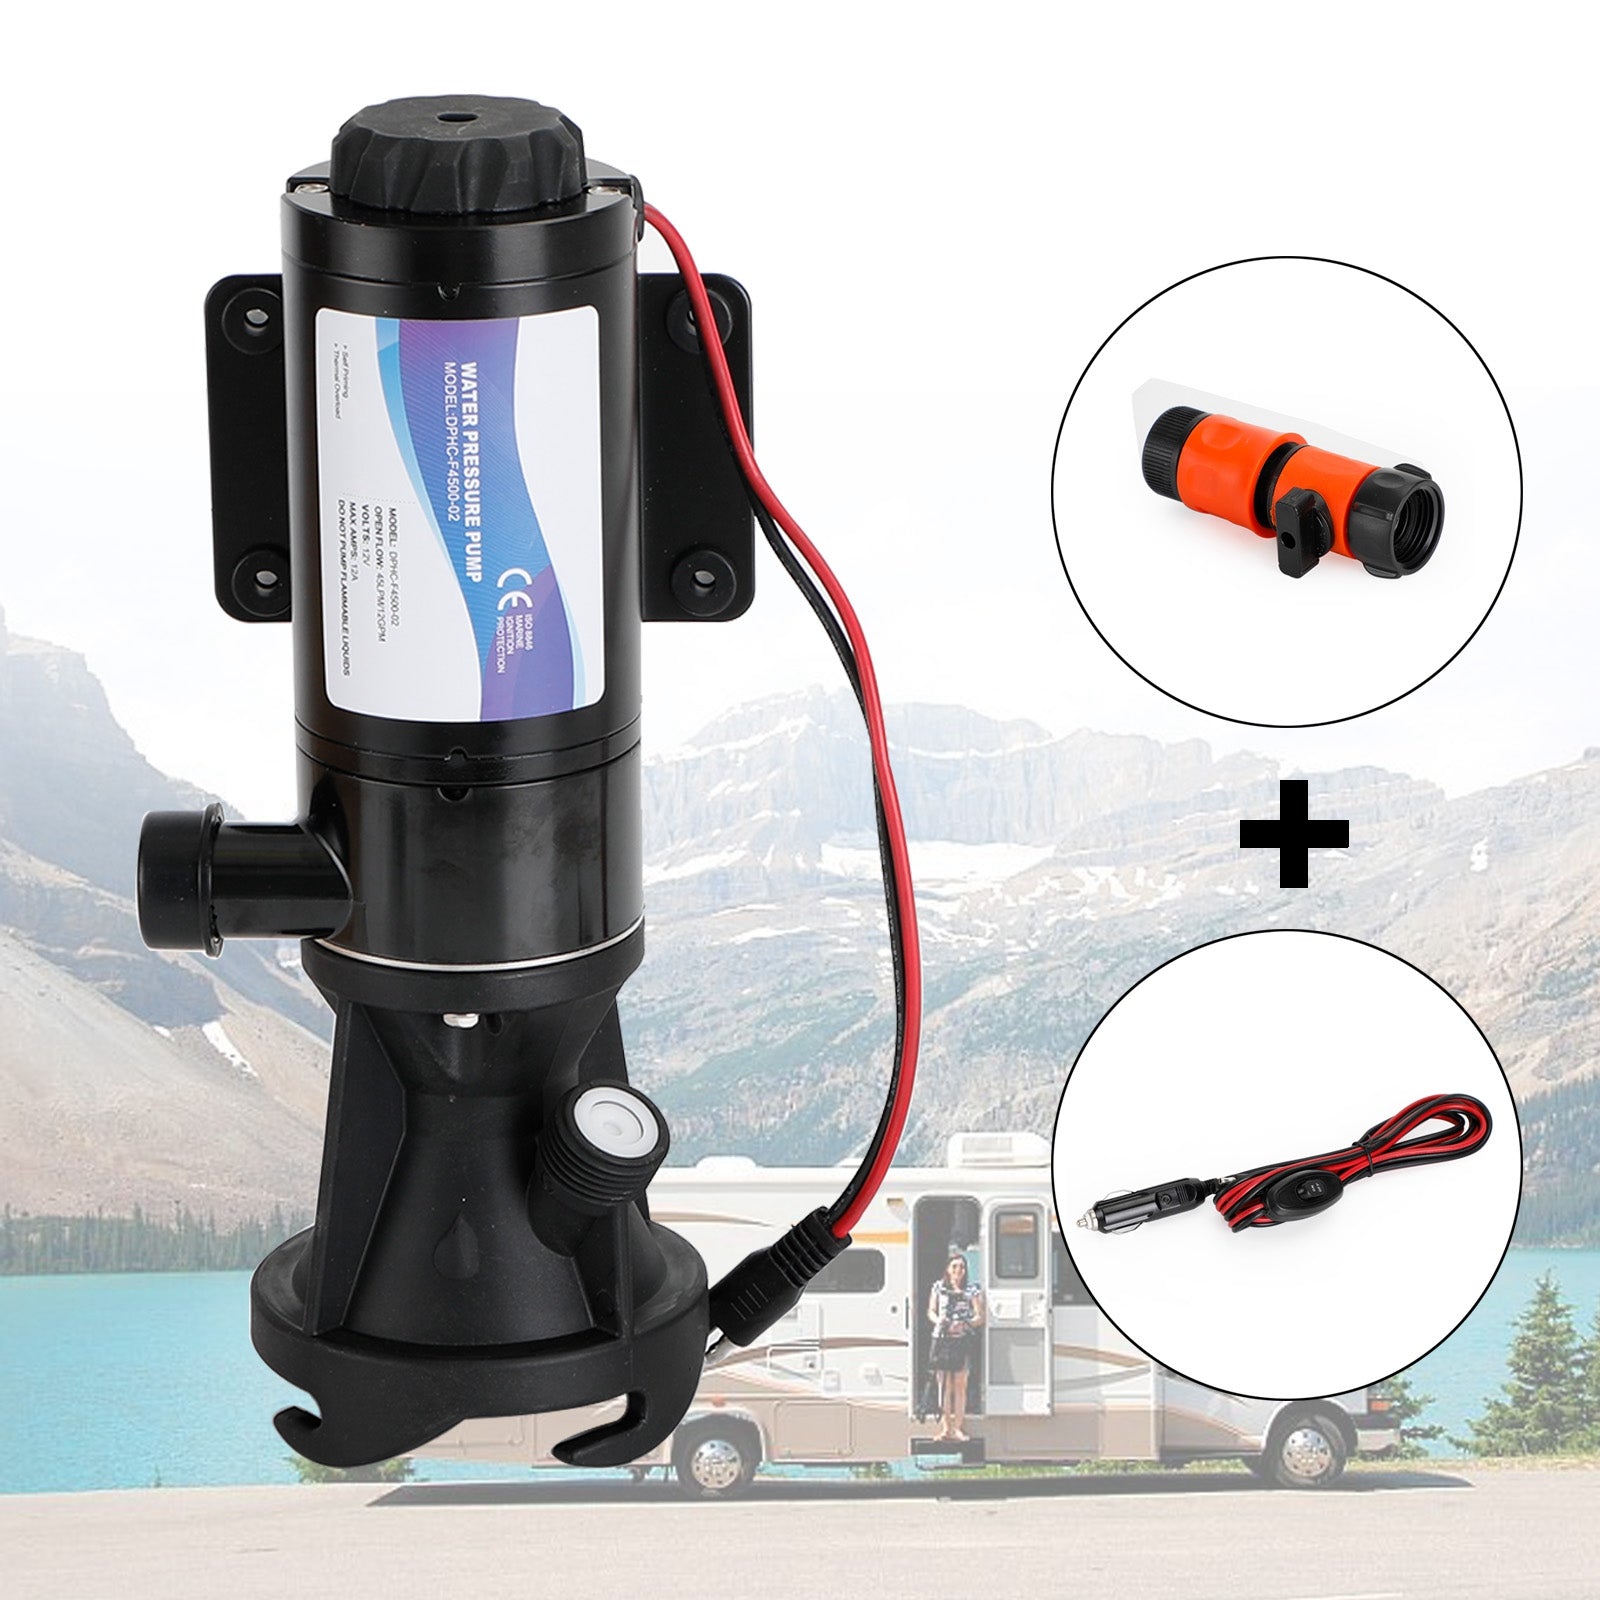 Portable 12V RV Macerator Pump for Waste Water Processing - Sewage Chopper Pump